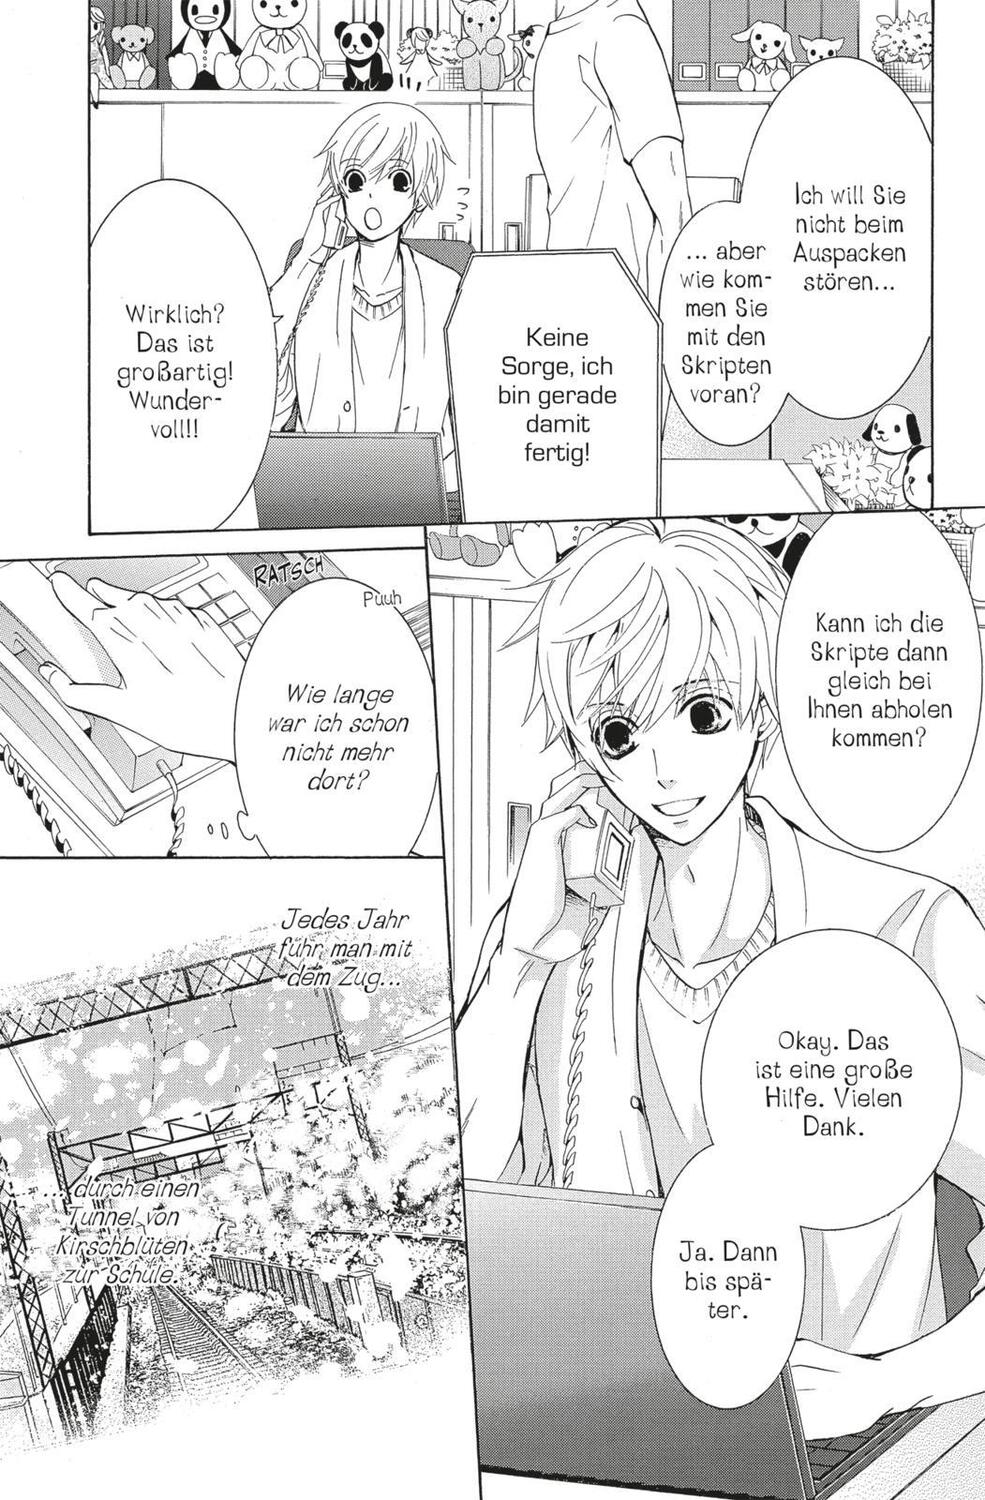 Bild: 9783551792846 | Sekaiichi Hatsukoi 14 | Boyslove-Story in der Manga-Redaktion | Buch